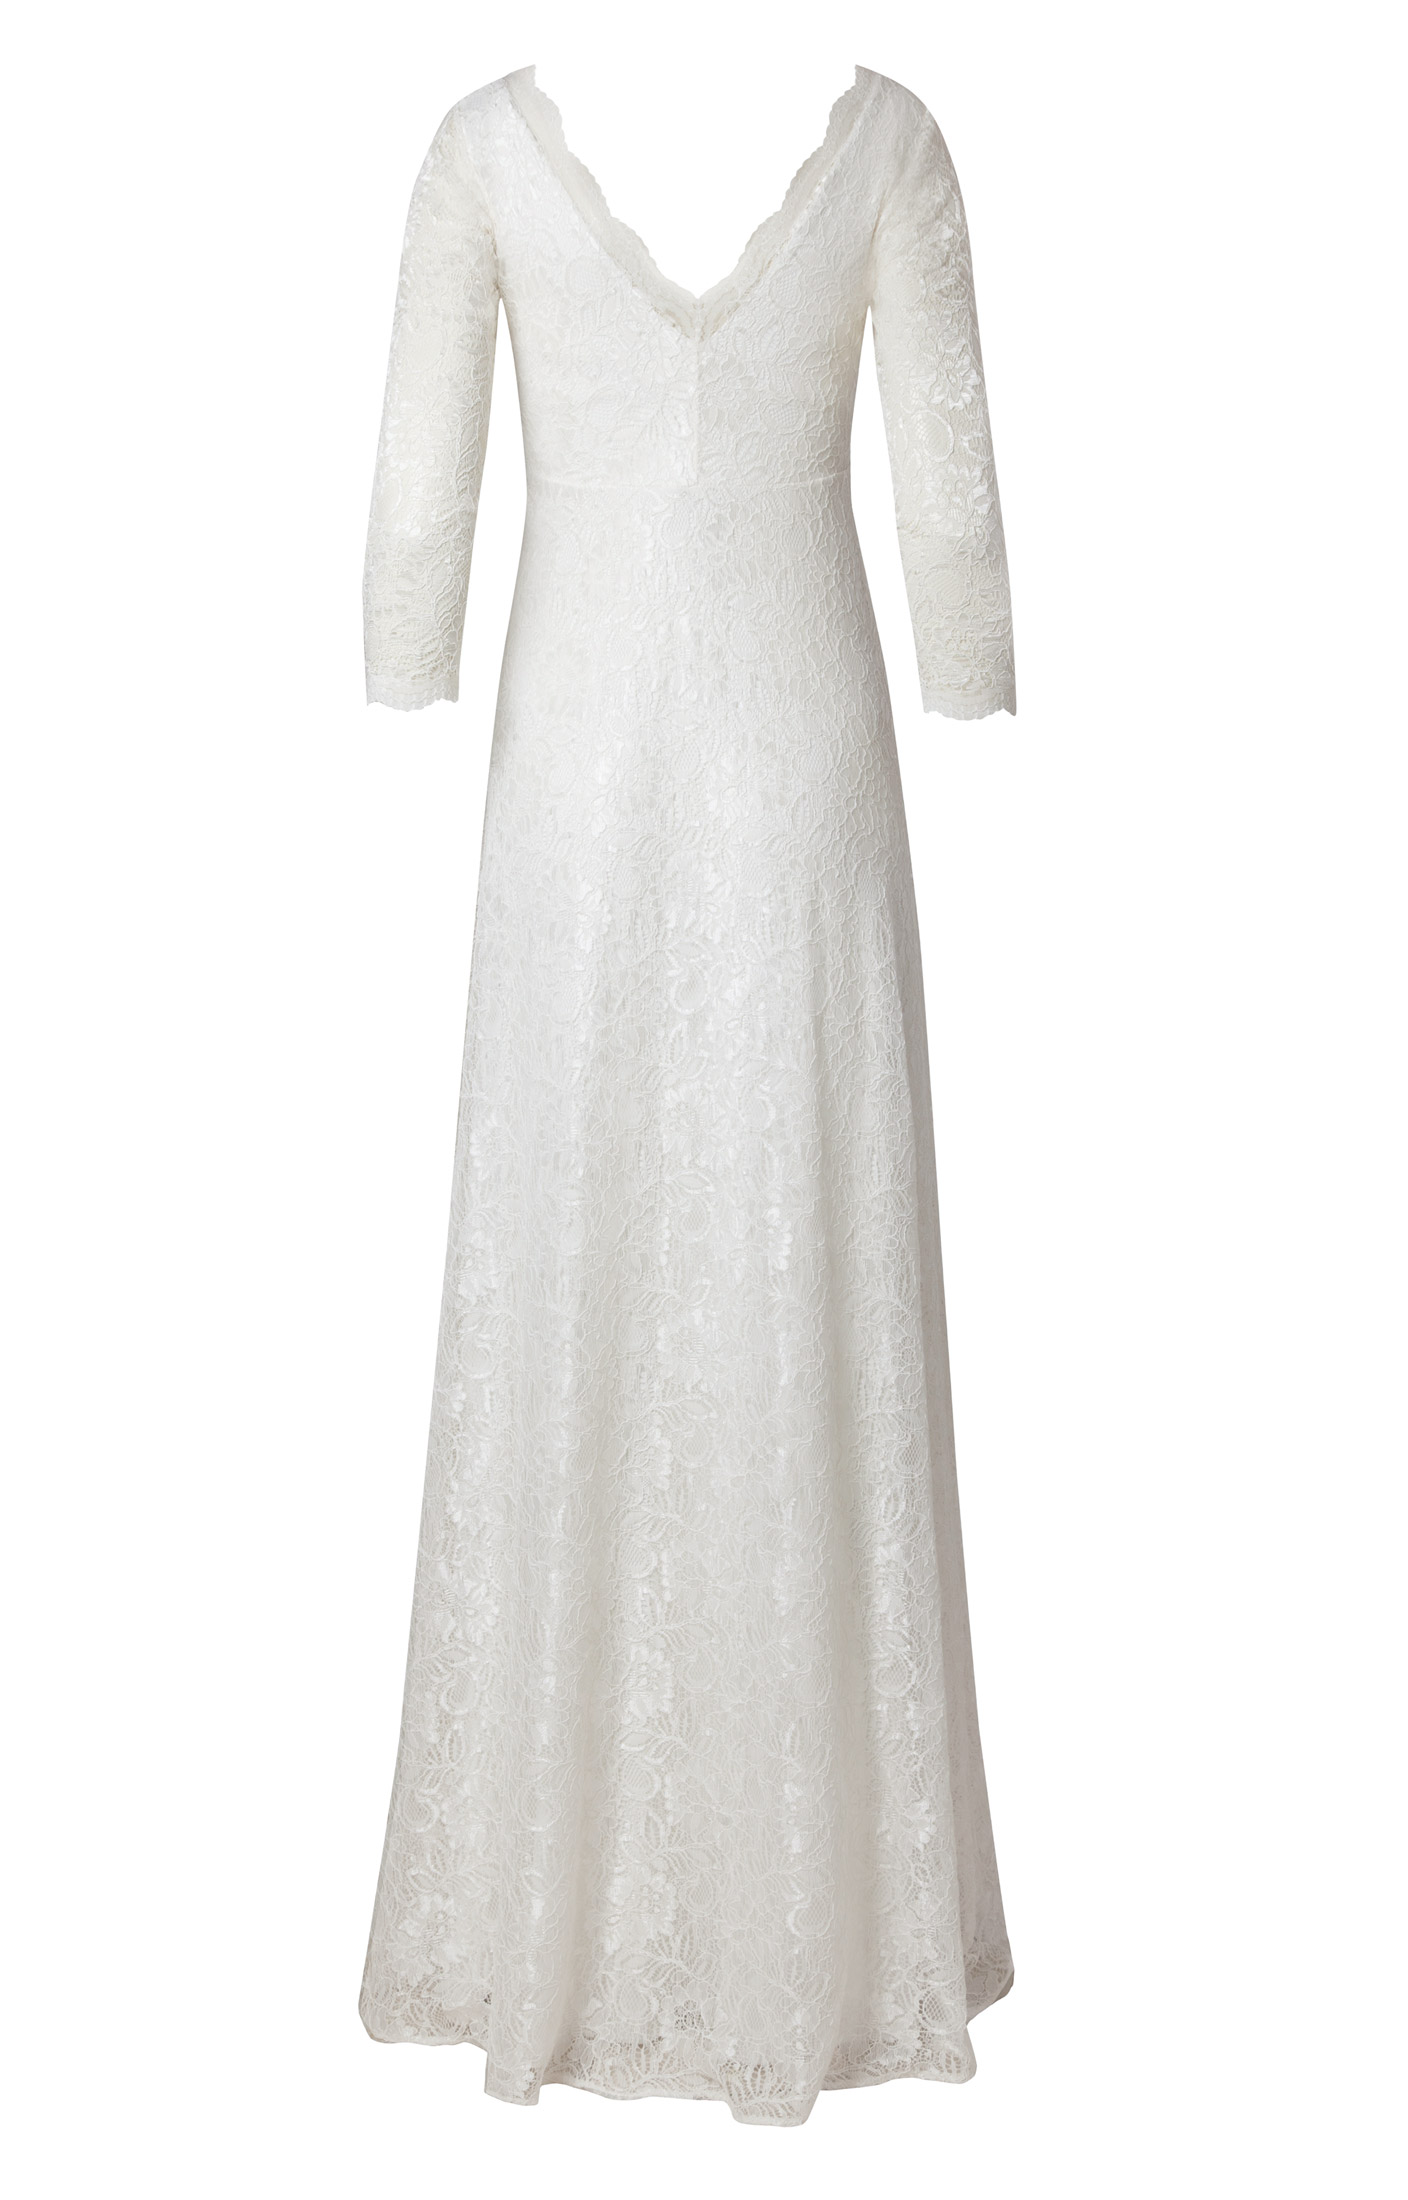 Phase Eight Eliza Ivory Sequin Lace Sleeve Trail Bridal Wedding Dress 14 to 16 